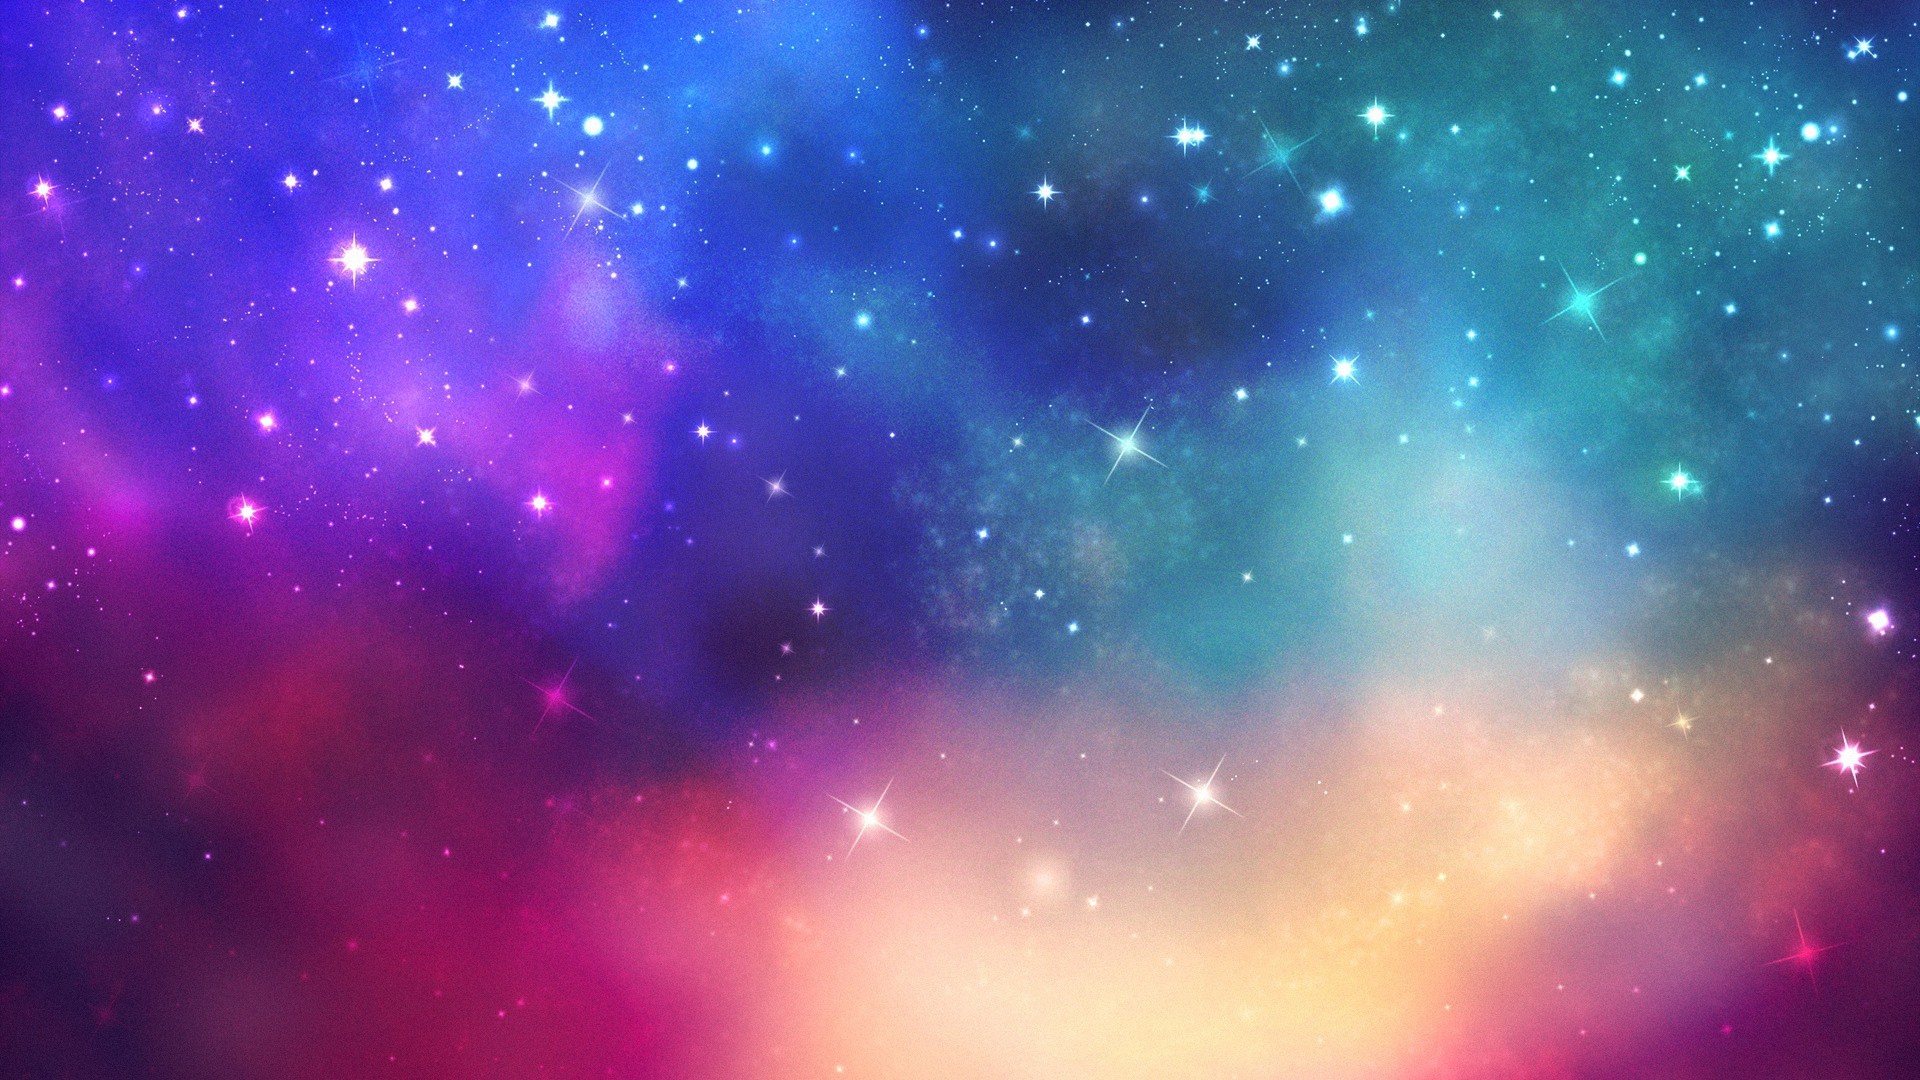 Galaxy wallpaper Tumblr ·① Download free beautiful ...